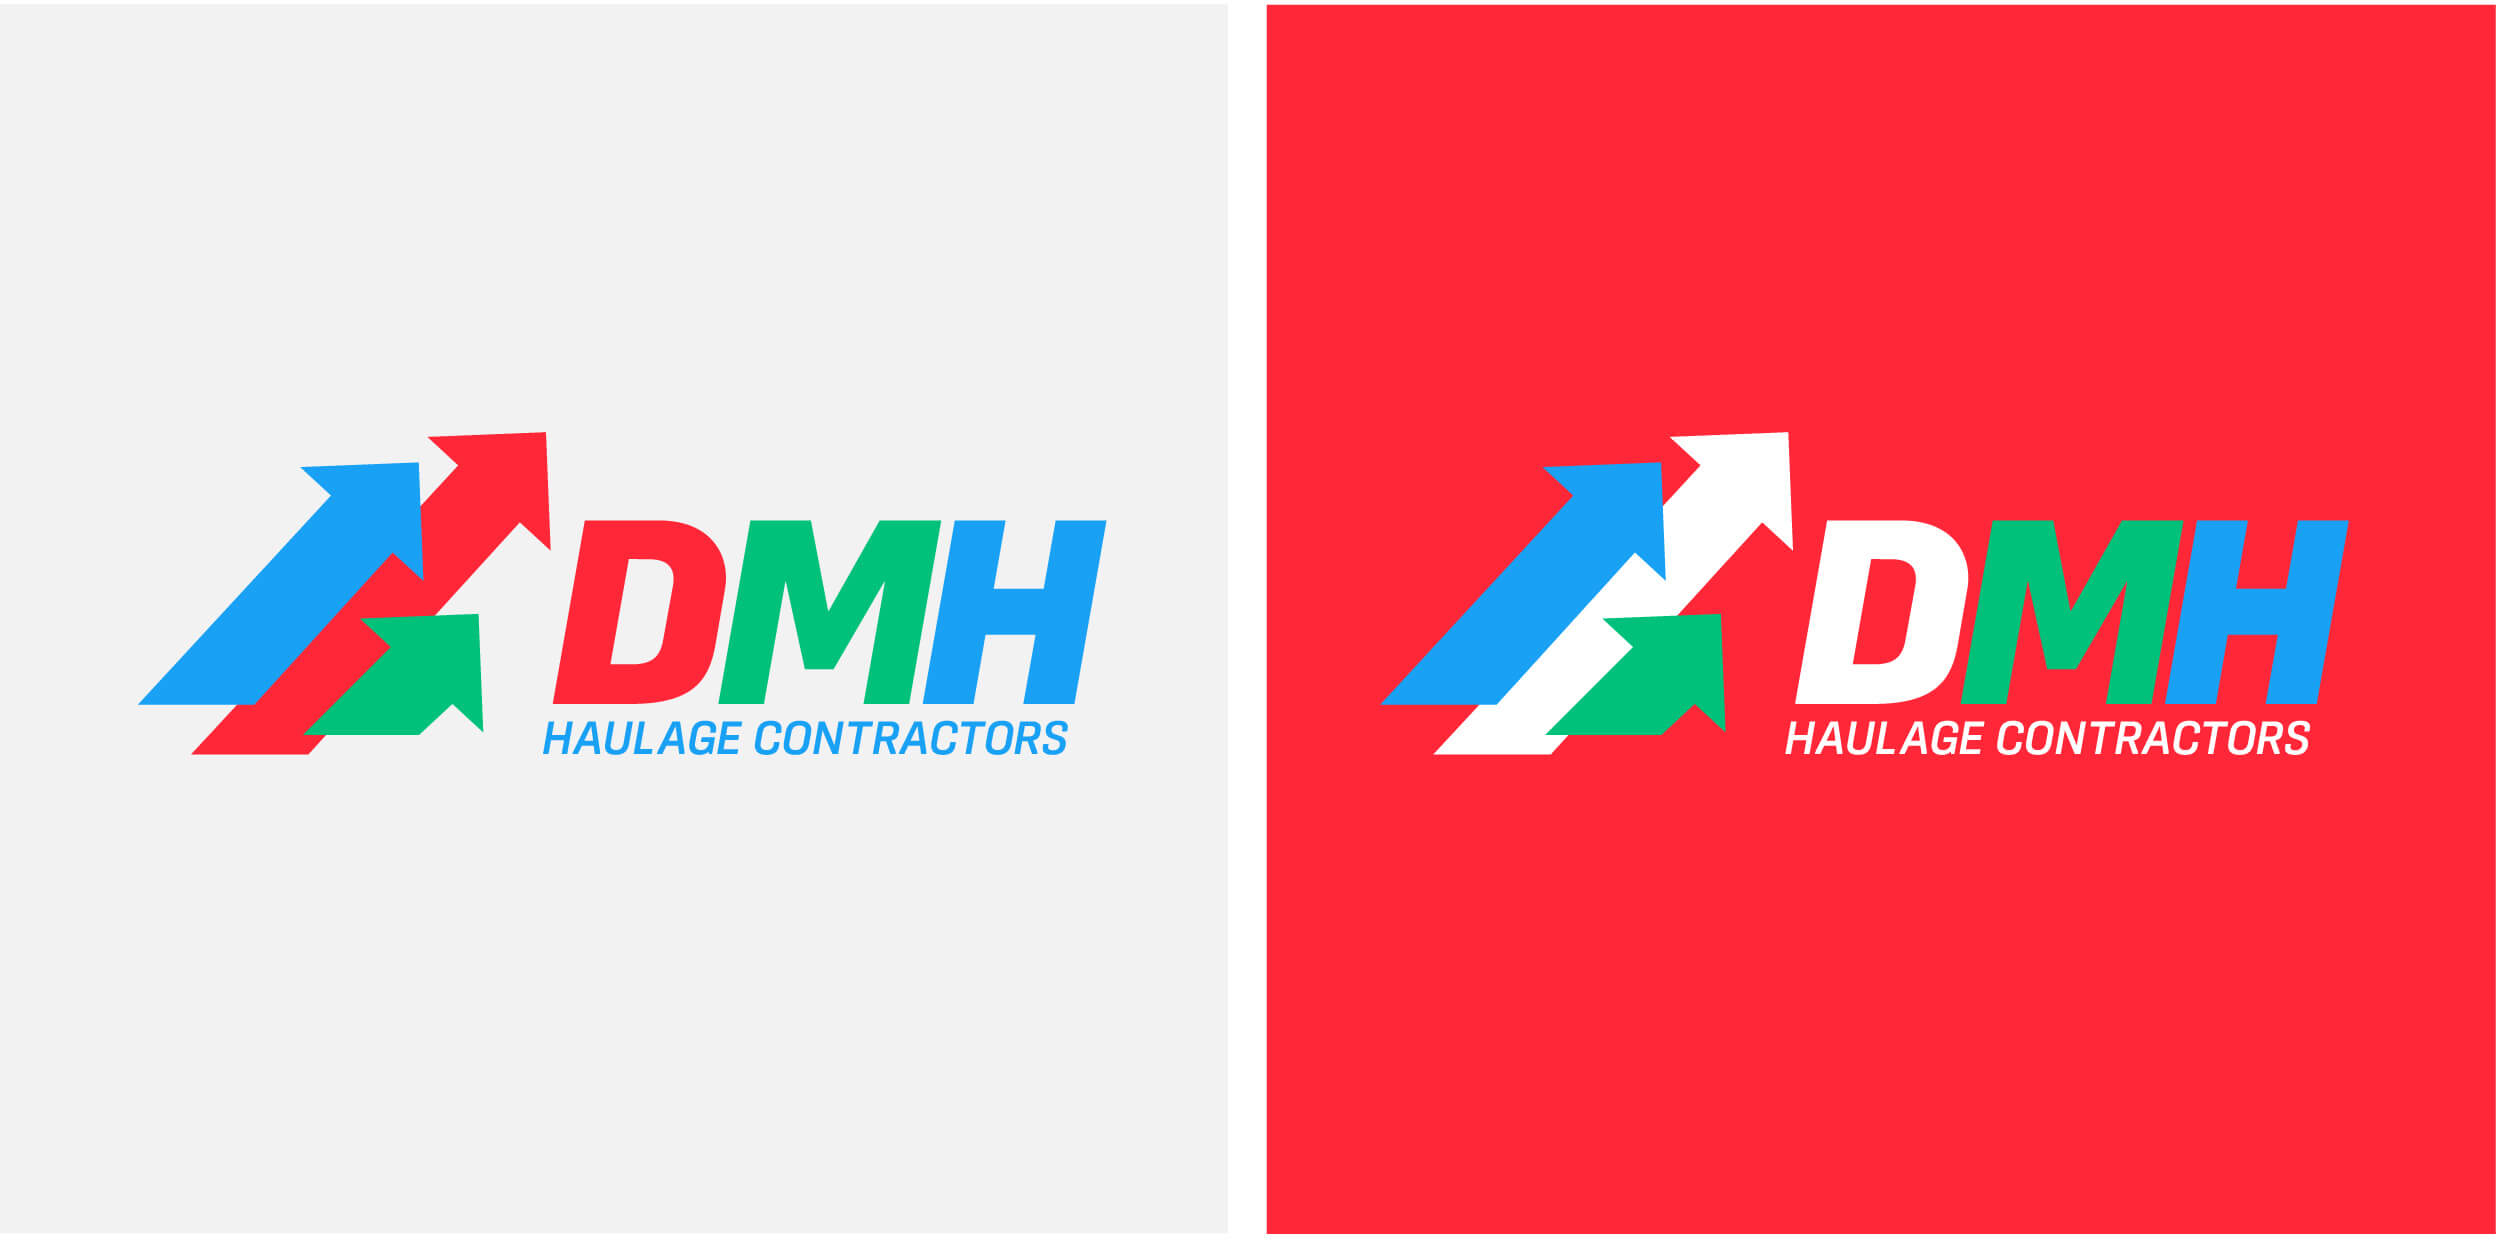 Final DMH Logo Design